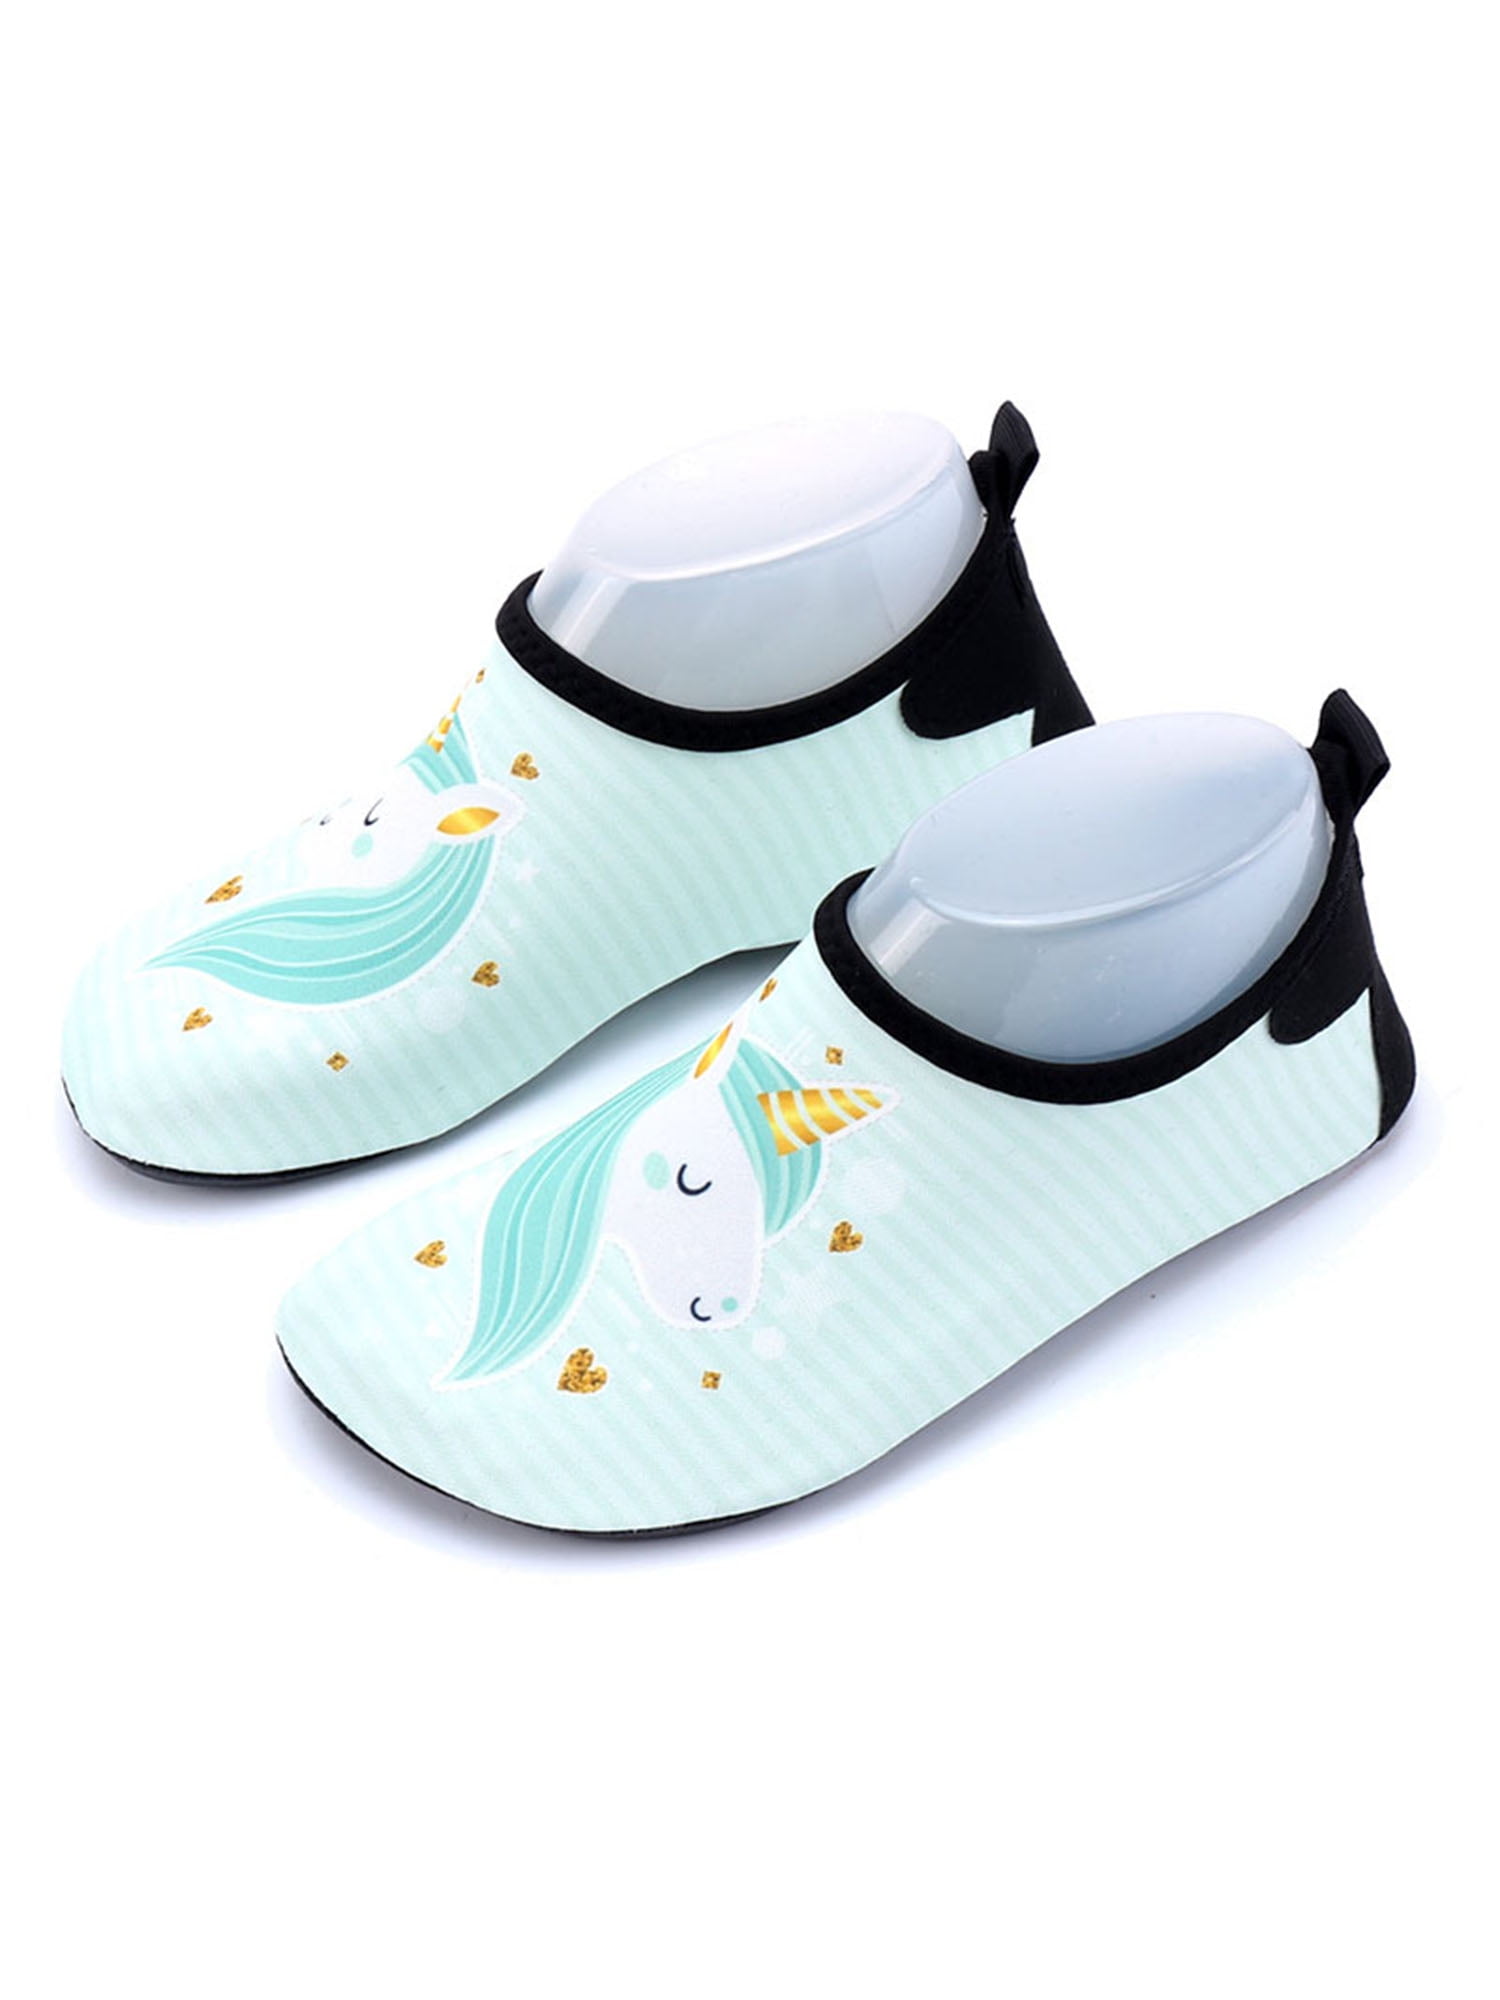 Kids Toddlers Water Shoes Aqua Socks Non-Slip Diving Socks Pool Beach Swim Size 